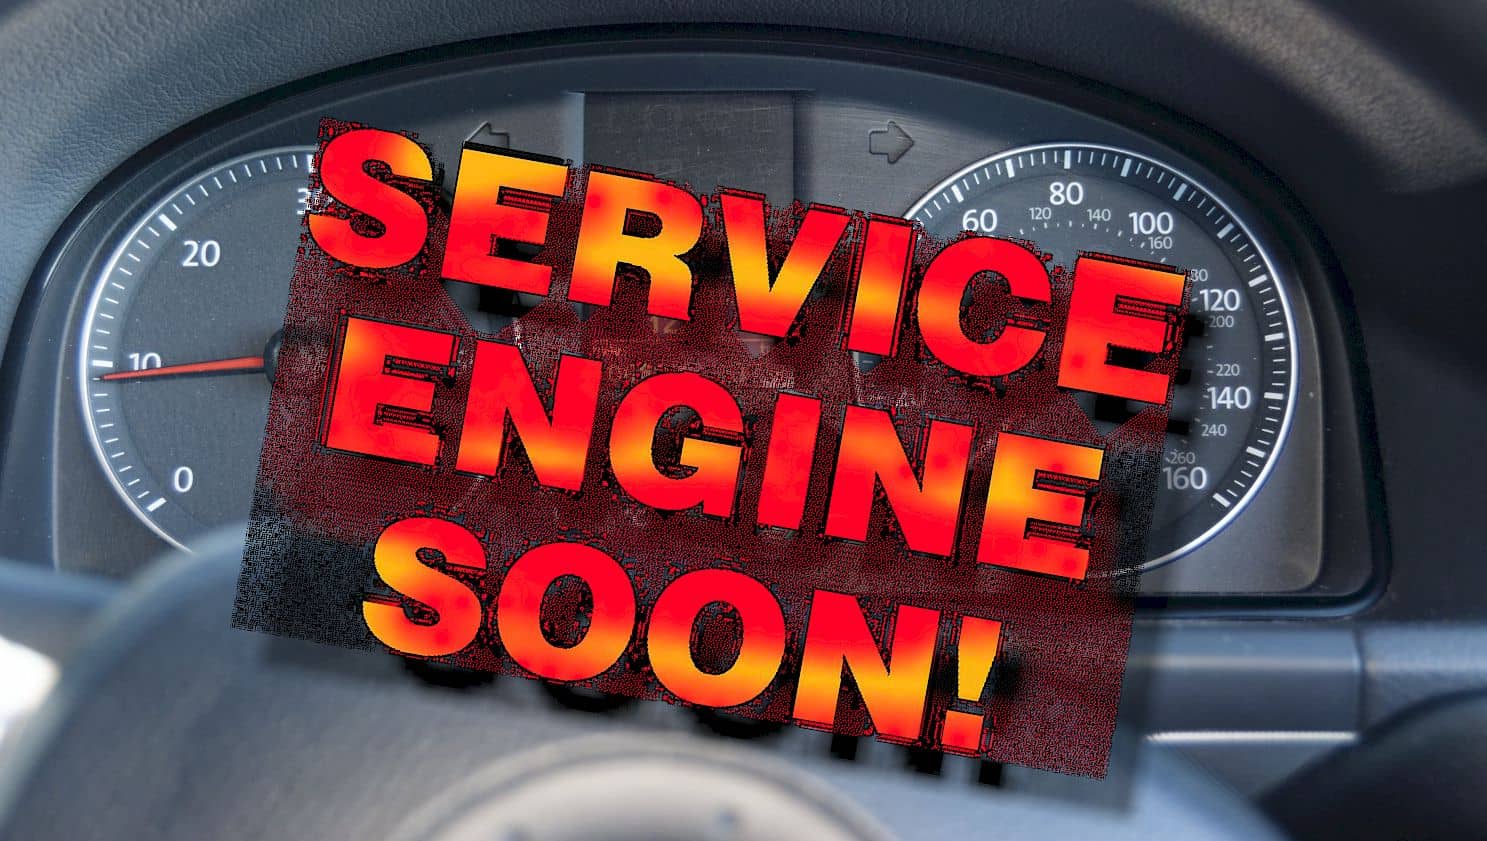 Service Engine Soon light